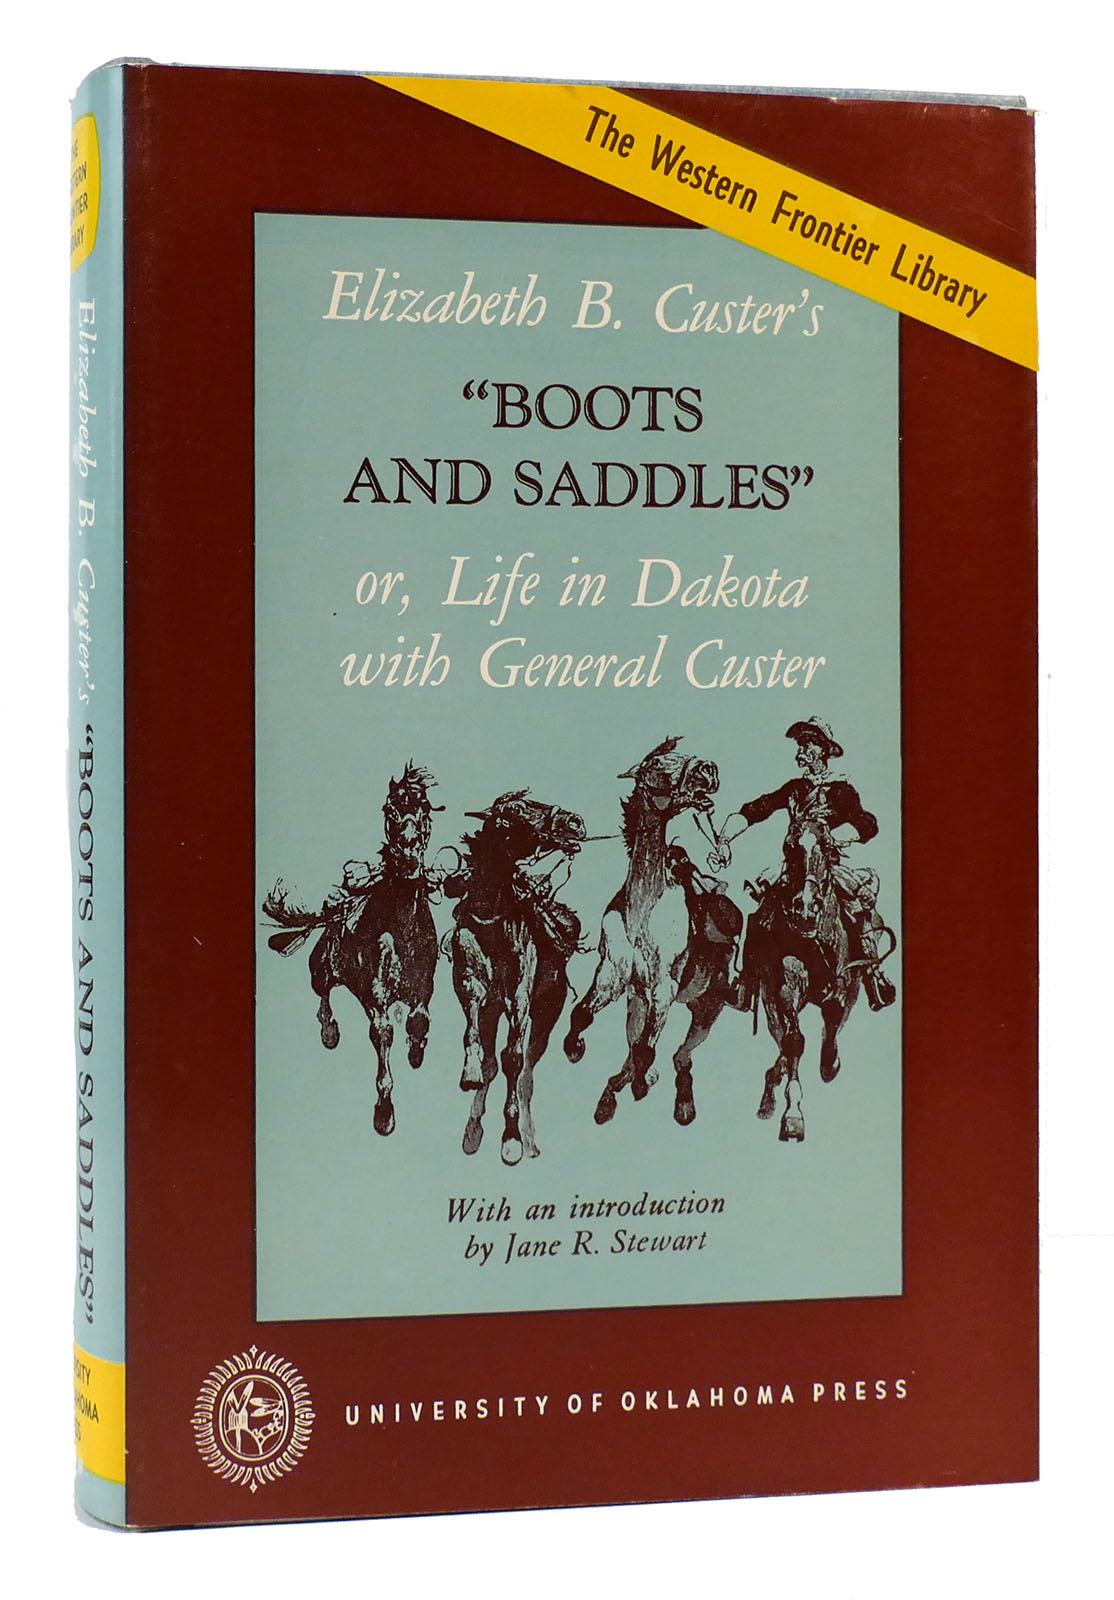 BOOTS AND SADDLES - Elizabeth B. Custer